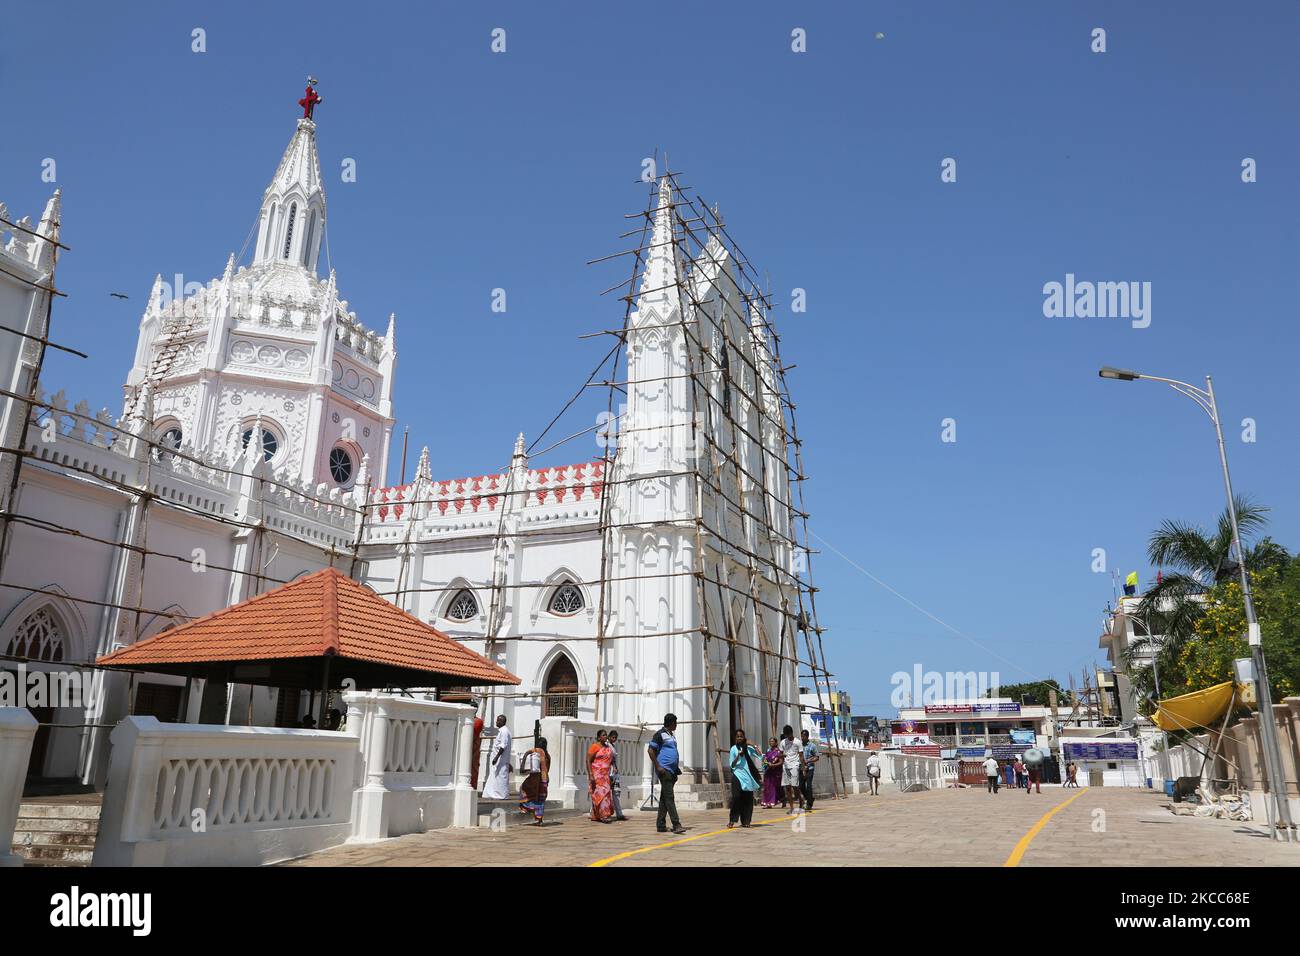 Annai Velankanni Church (Basilica of Our Lady of Good Health) in Velankanni, Tamil Nadu, India. (Photo by Creative Touch Imaging Ltd./NurPhoto) Stock Photo